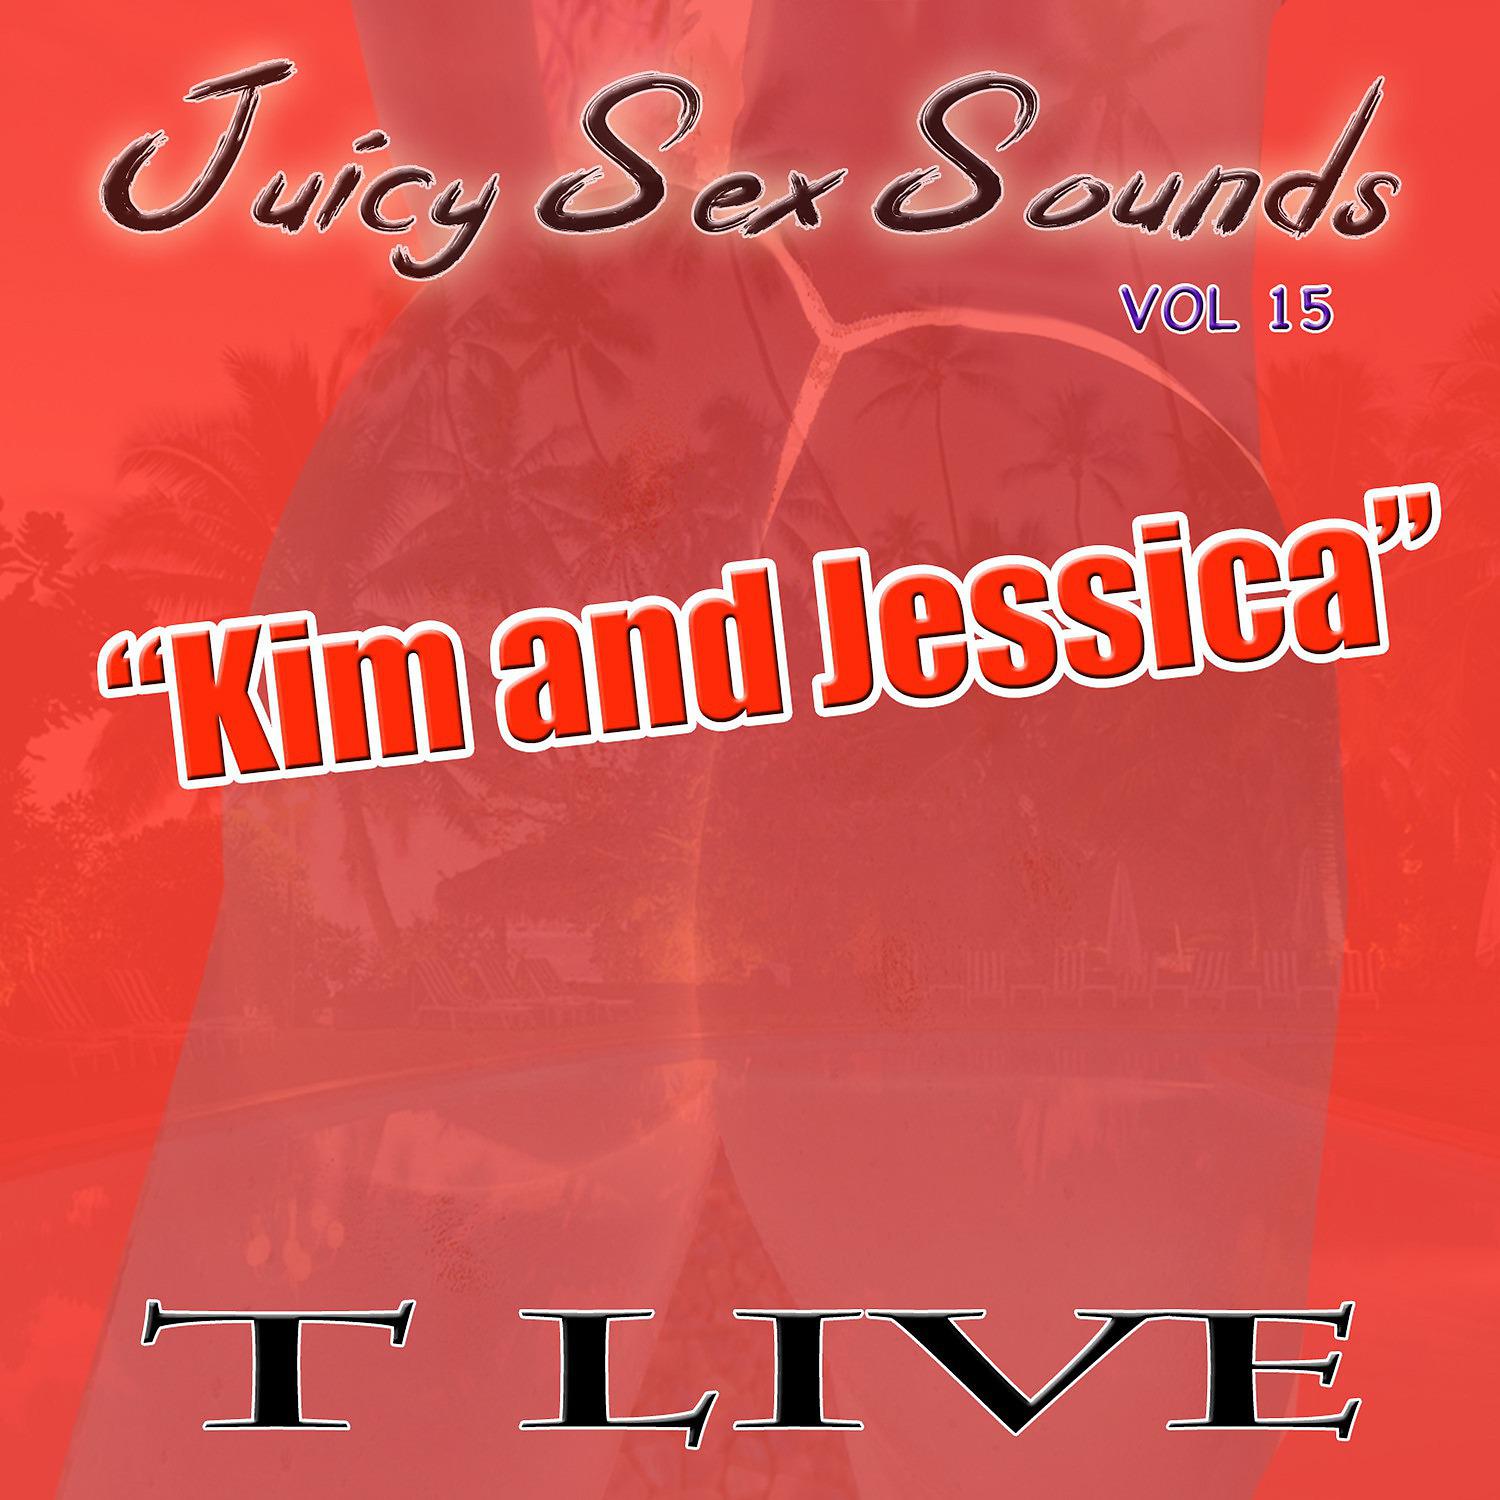 Постер альбома Juicy Sex Sounds Vol 15 "Kim and Jessica